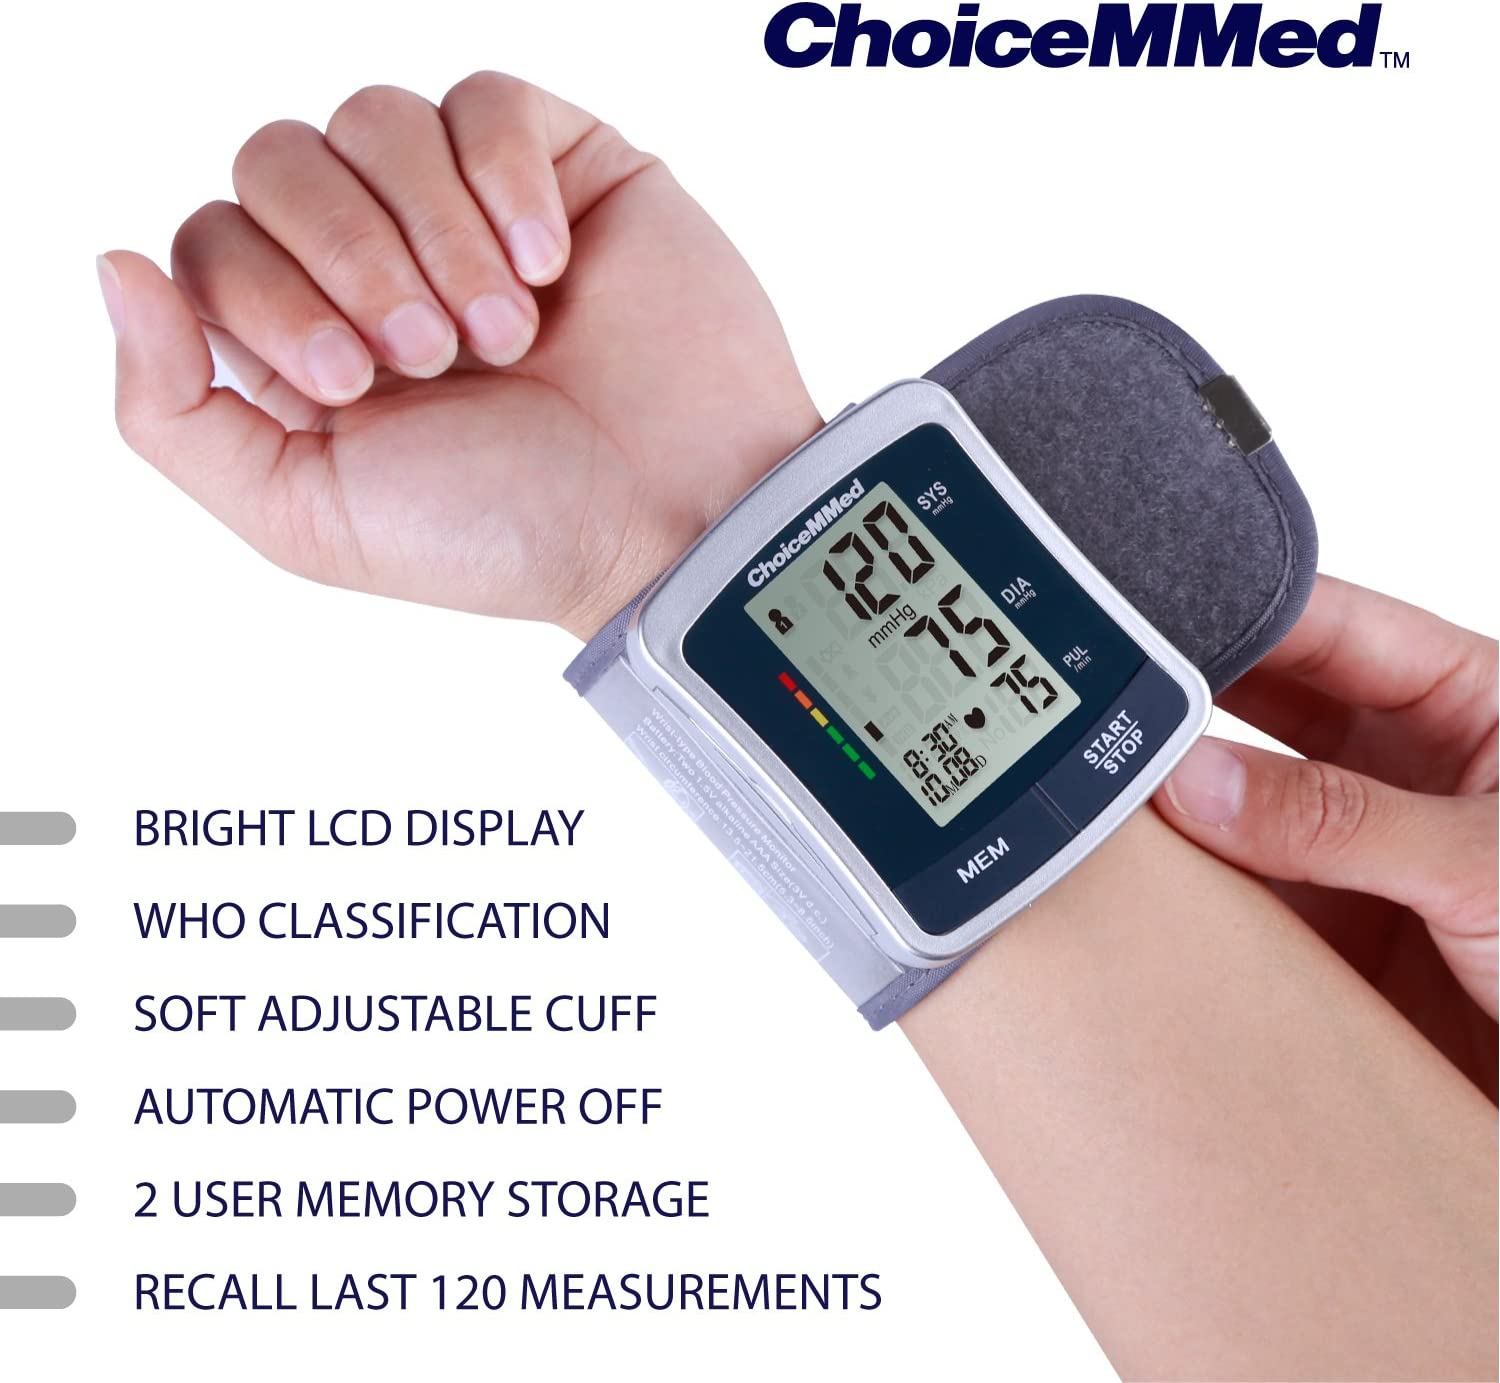 The Best 8 Blood Pressure Monitors